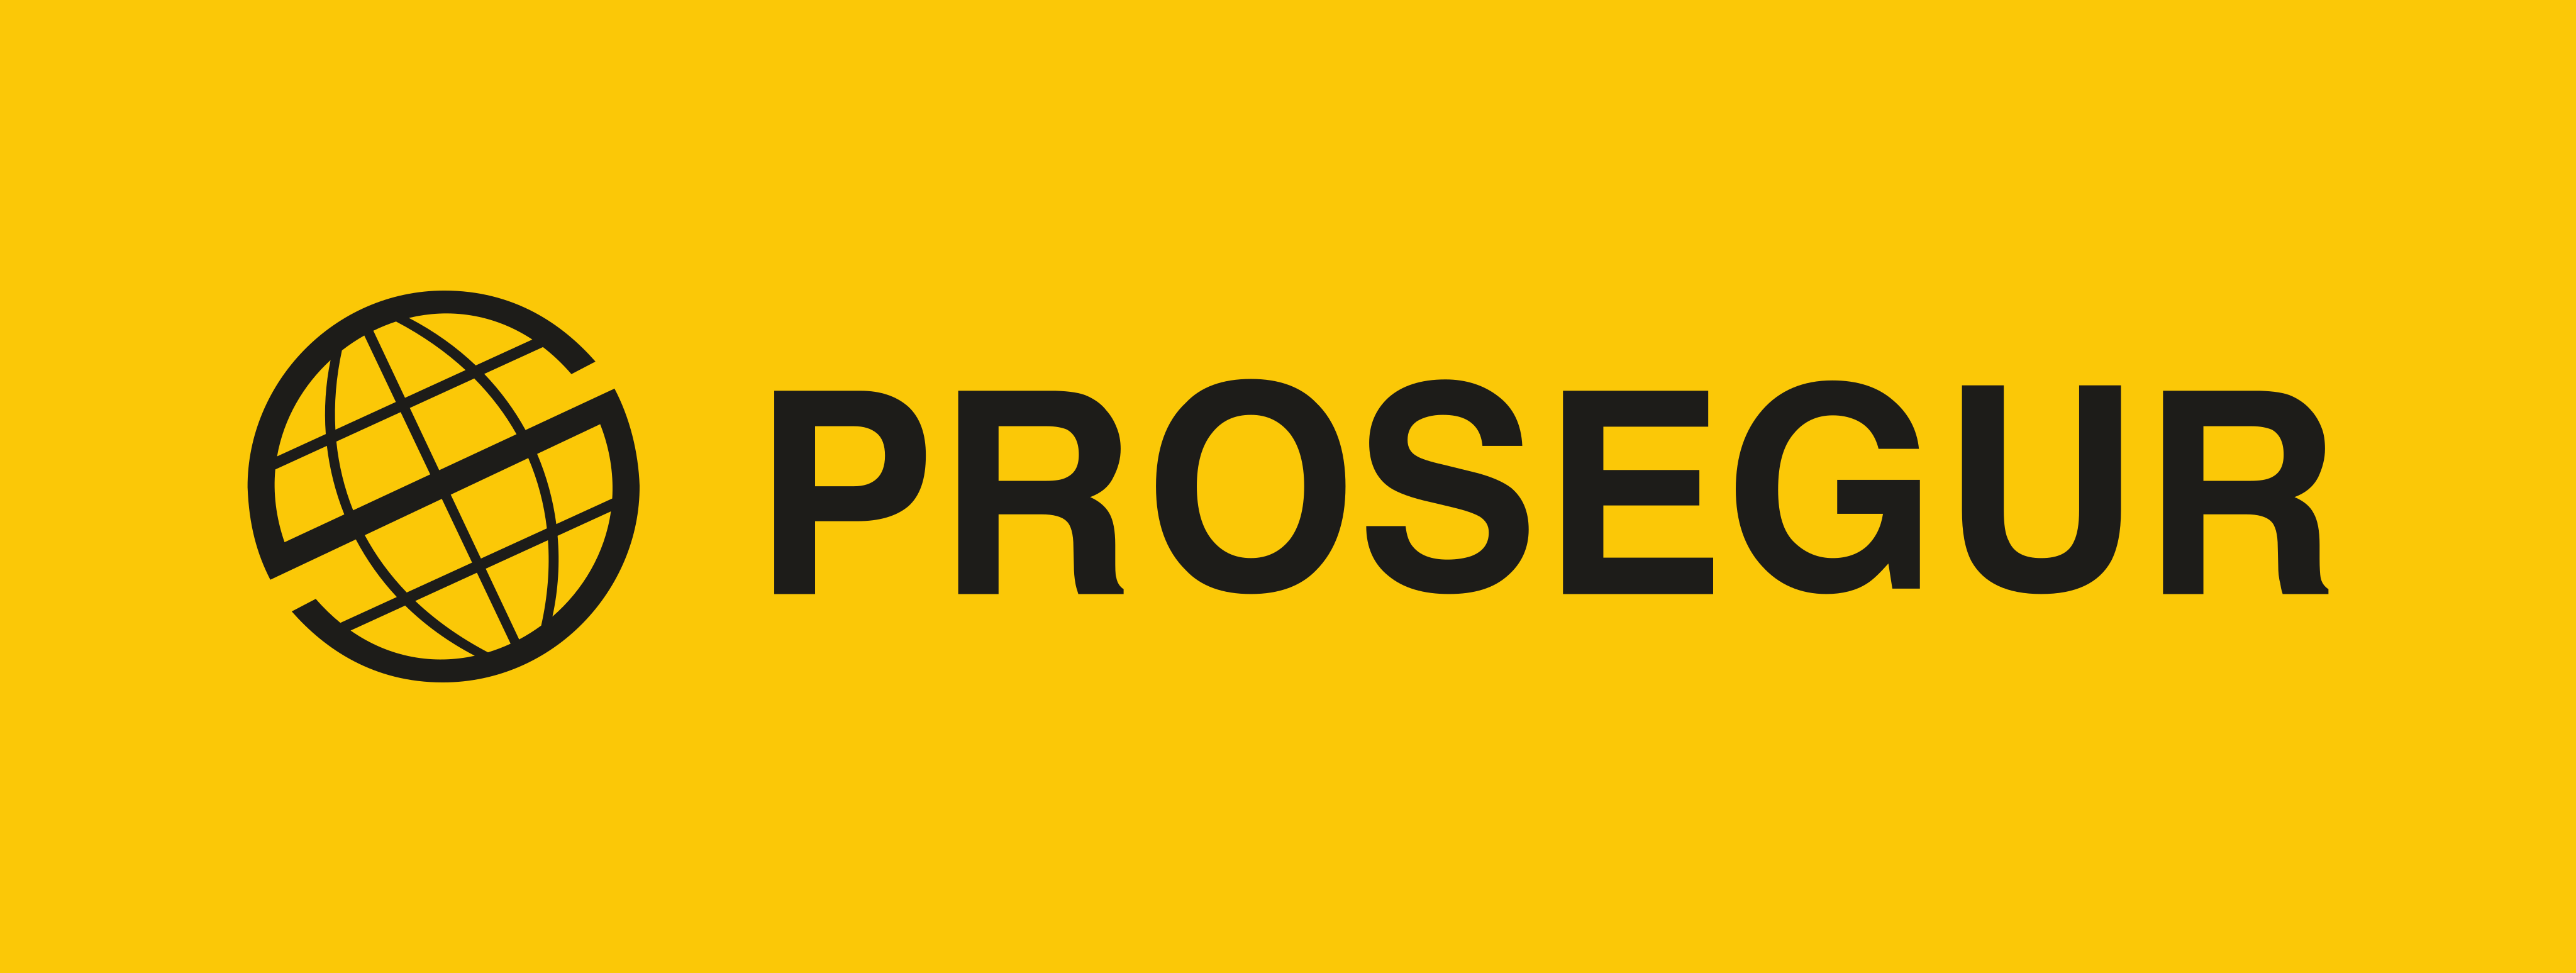 Prosegur Brand Logo